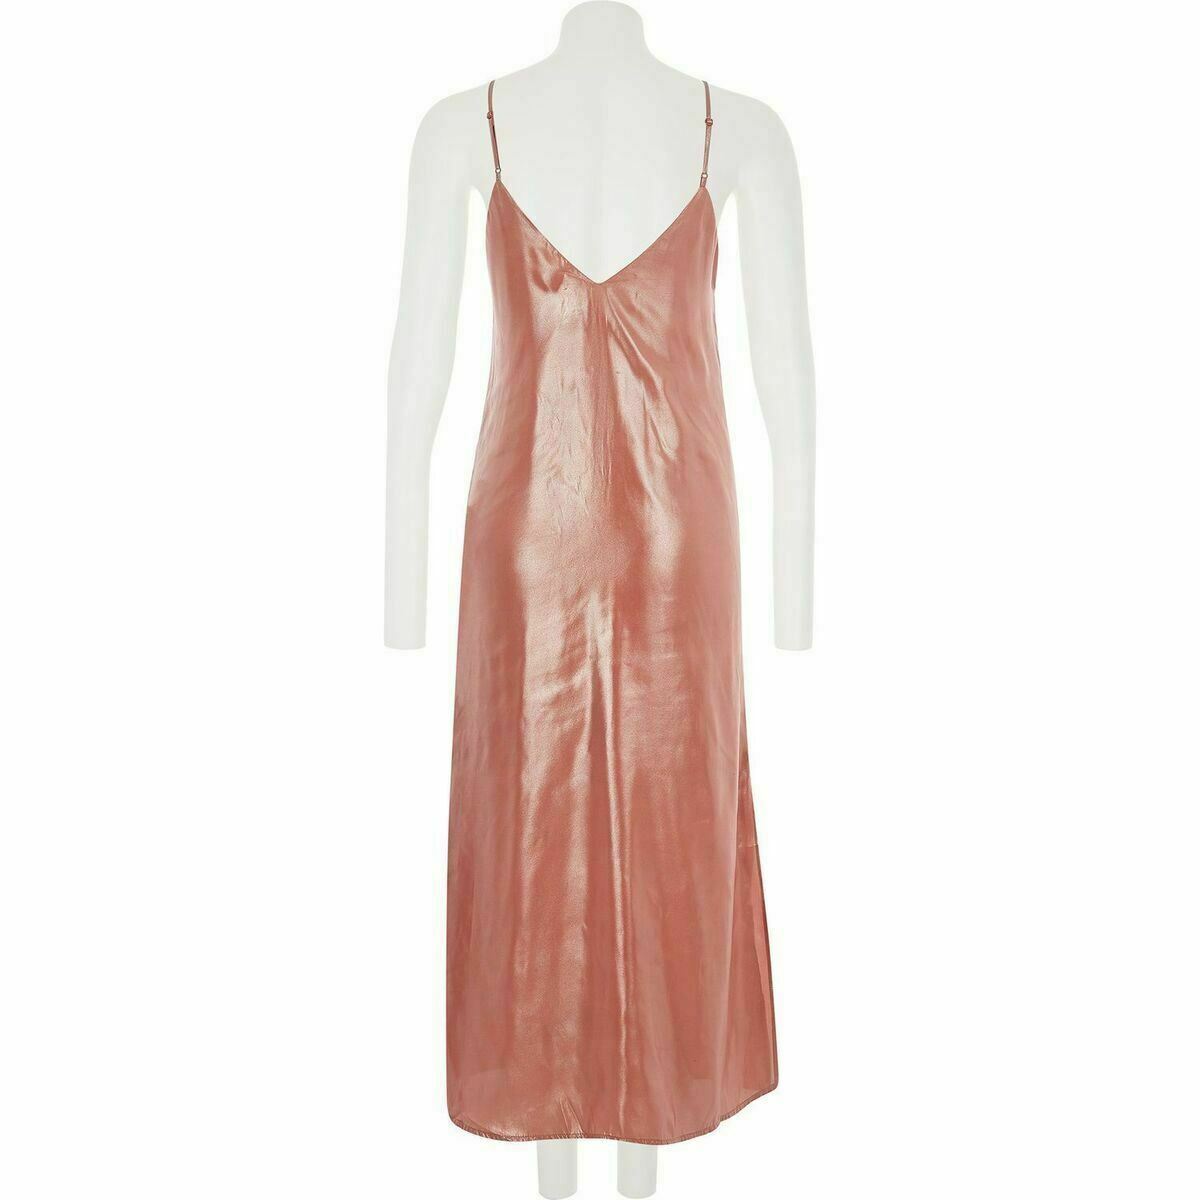 BARDOT Women's High Shine Midi Slip Dress, Coral Pink, size UK 10